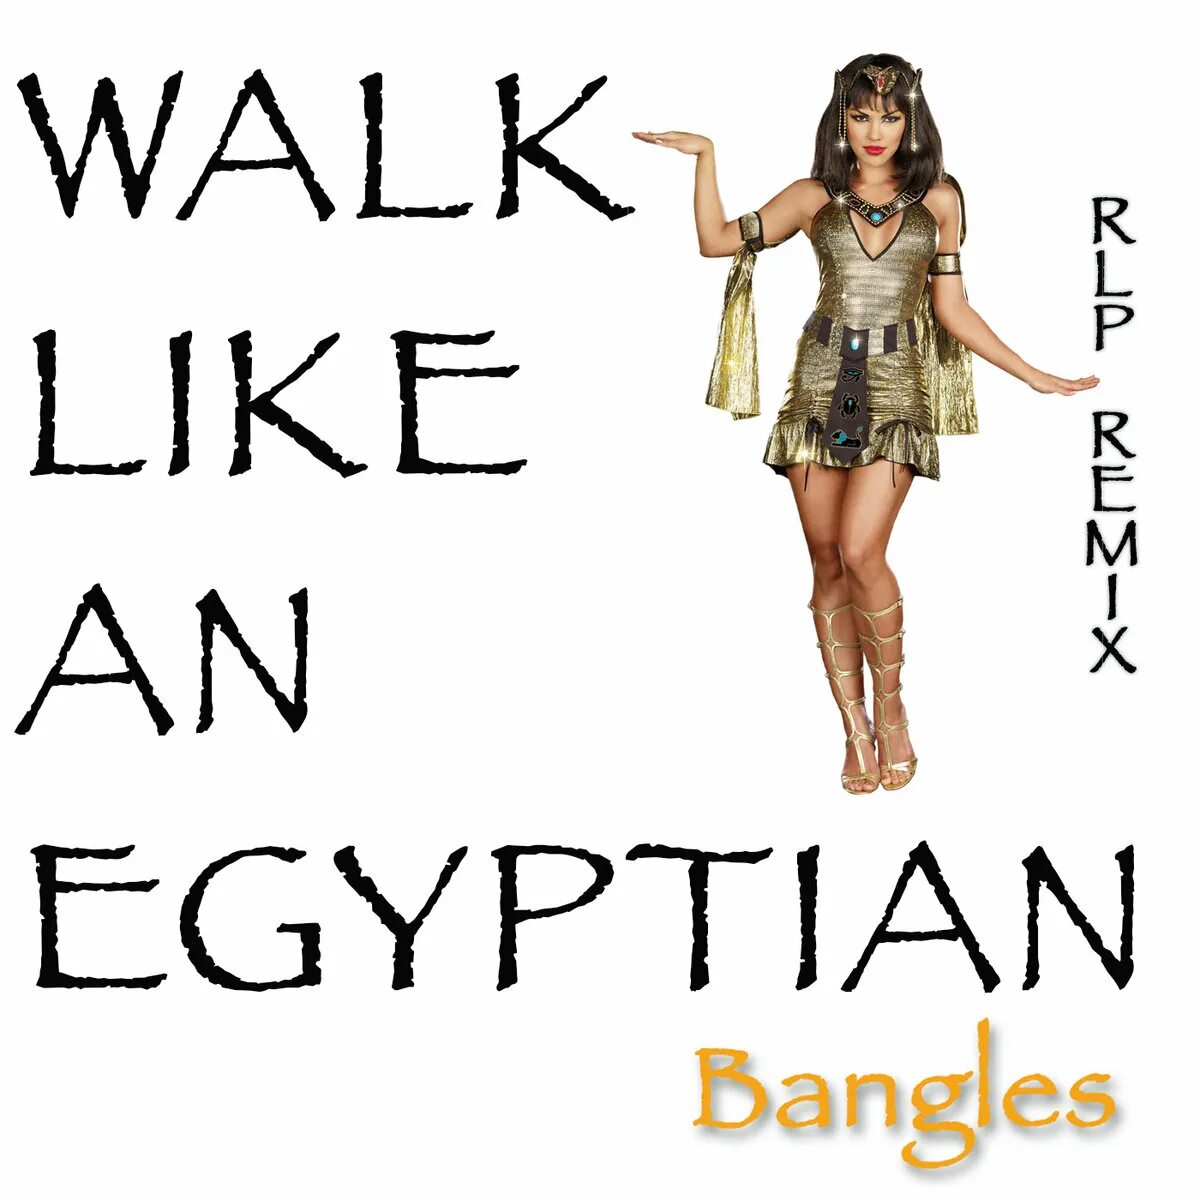 Bangles walk like. Walk like an Egyptian. Bangles_walk an Egyptian. Walking like an Egyptian. Walk like Egyptian группа.